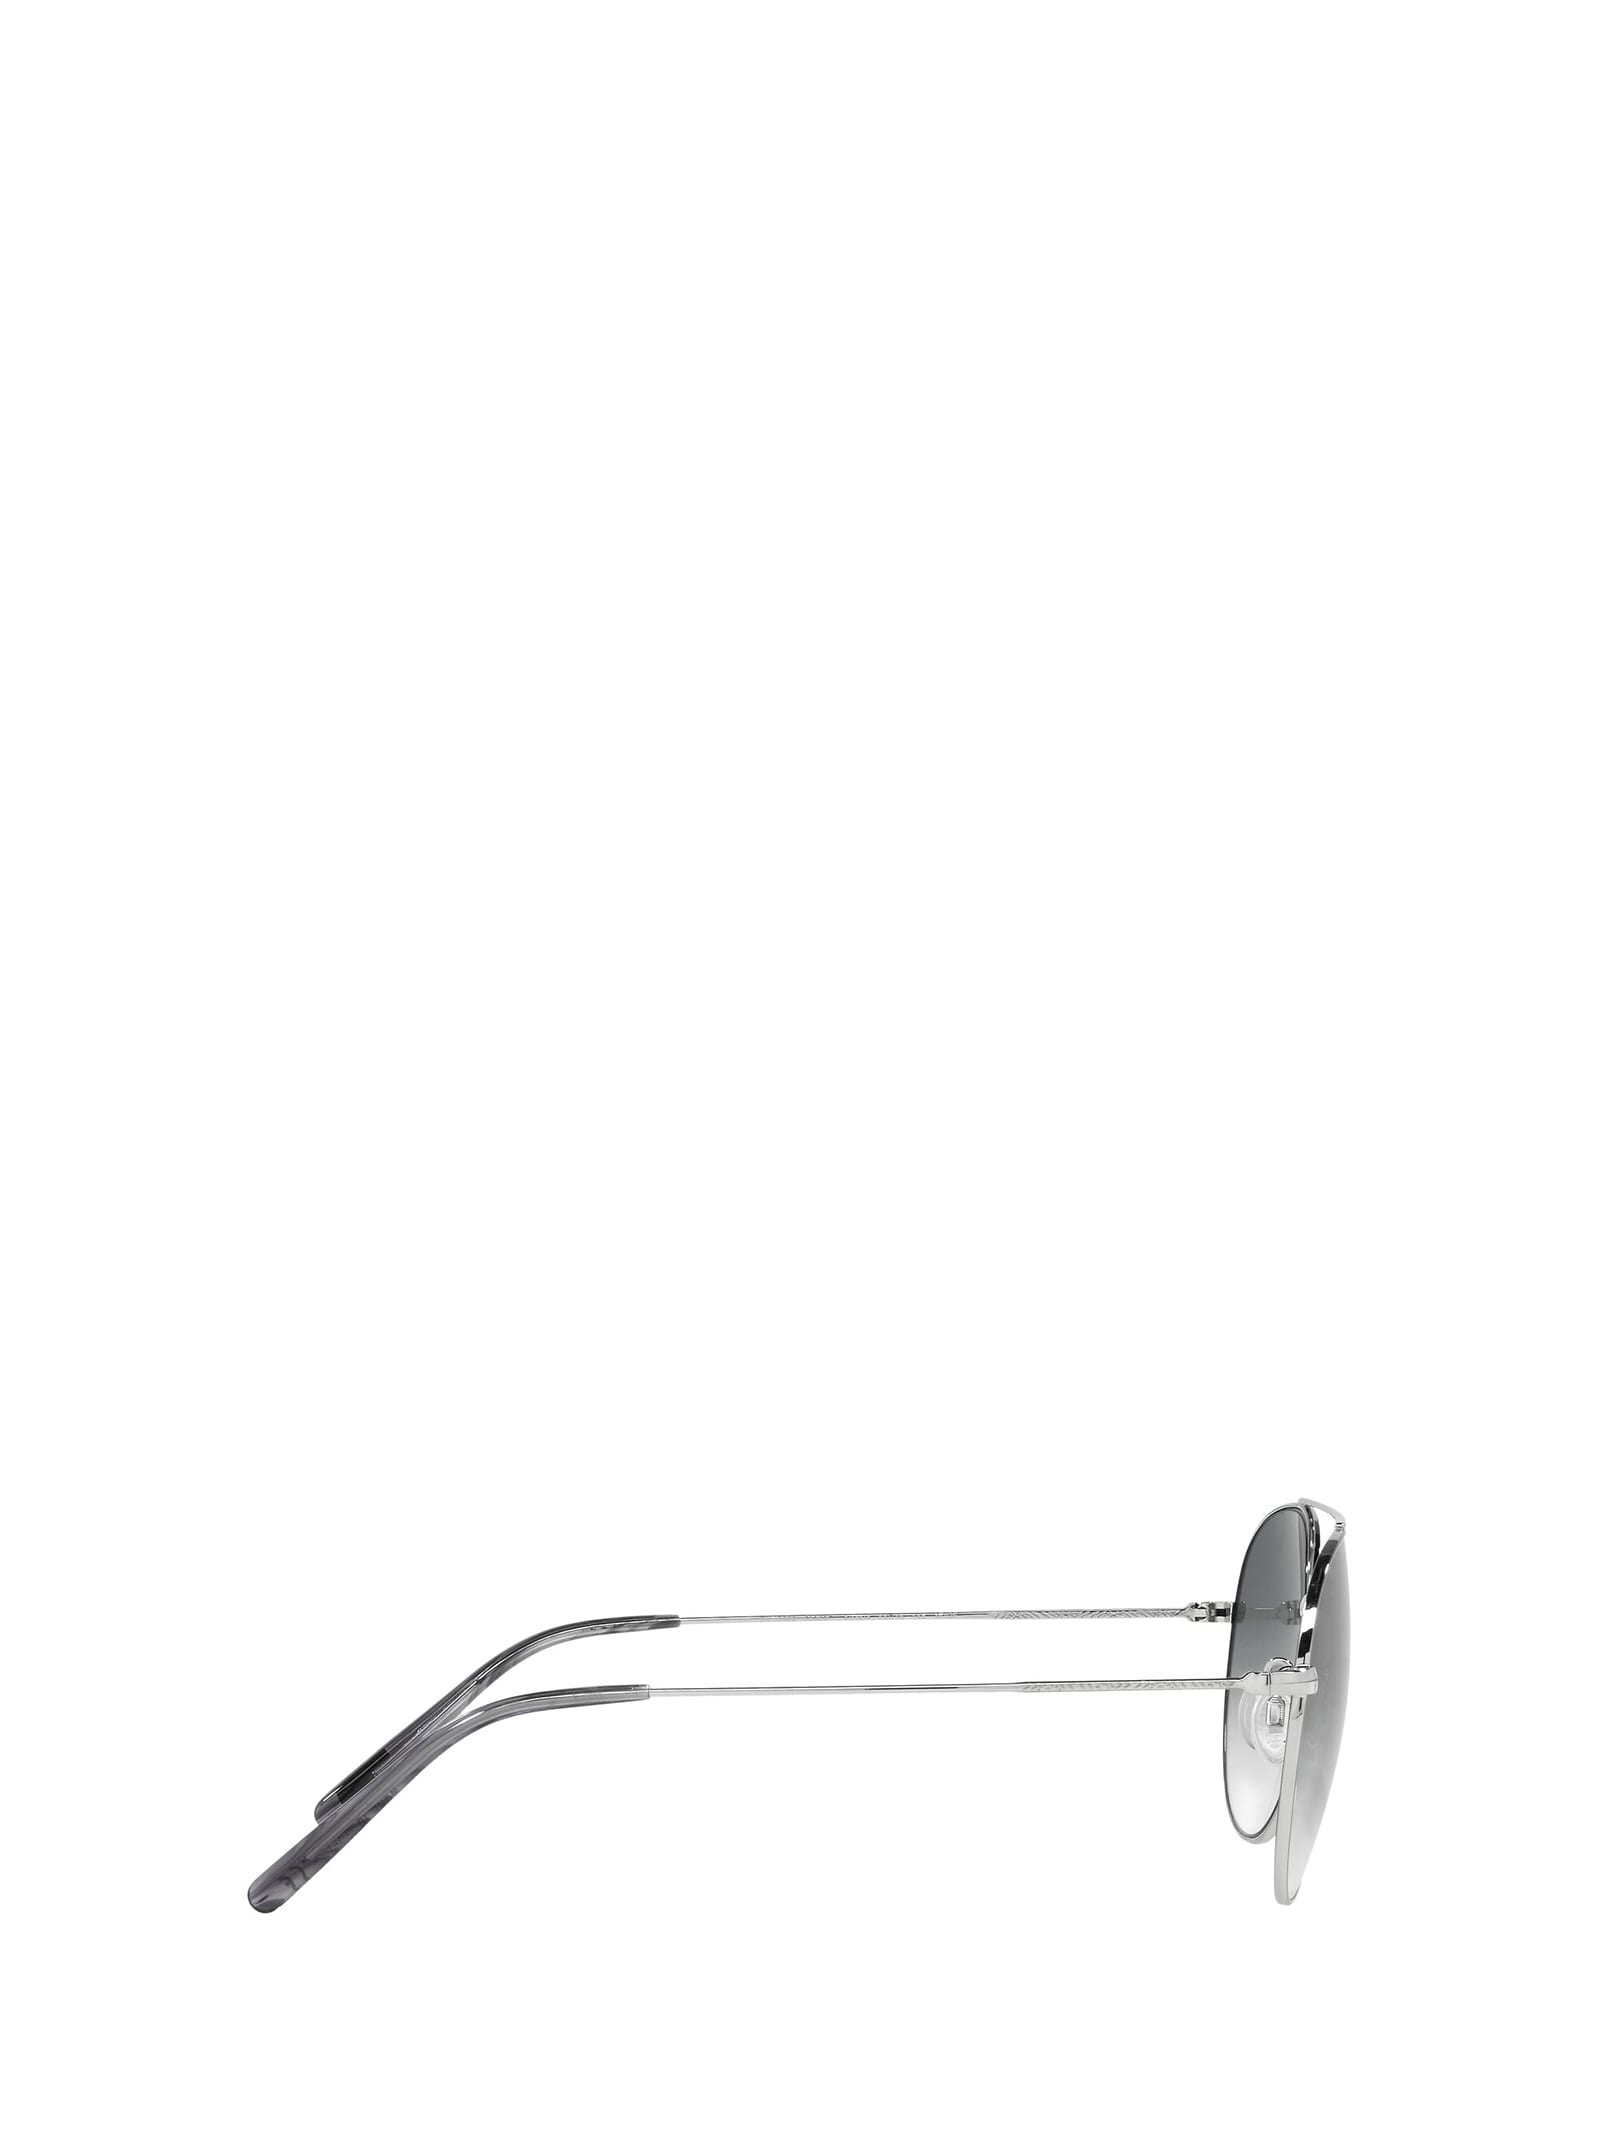 Shop Oliver Peoples Ov1286s Silver Sunglasses